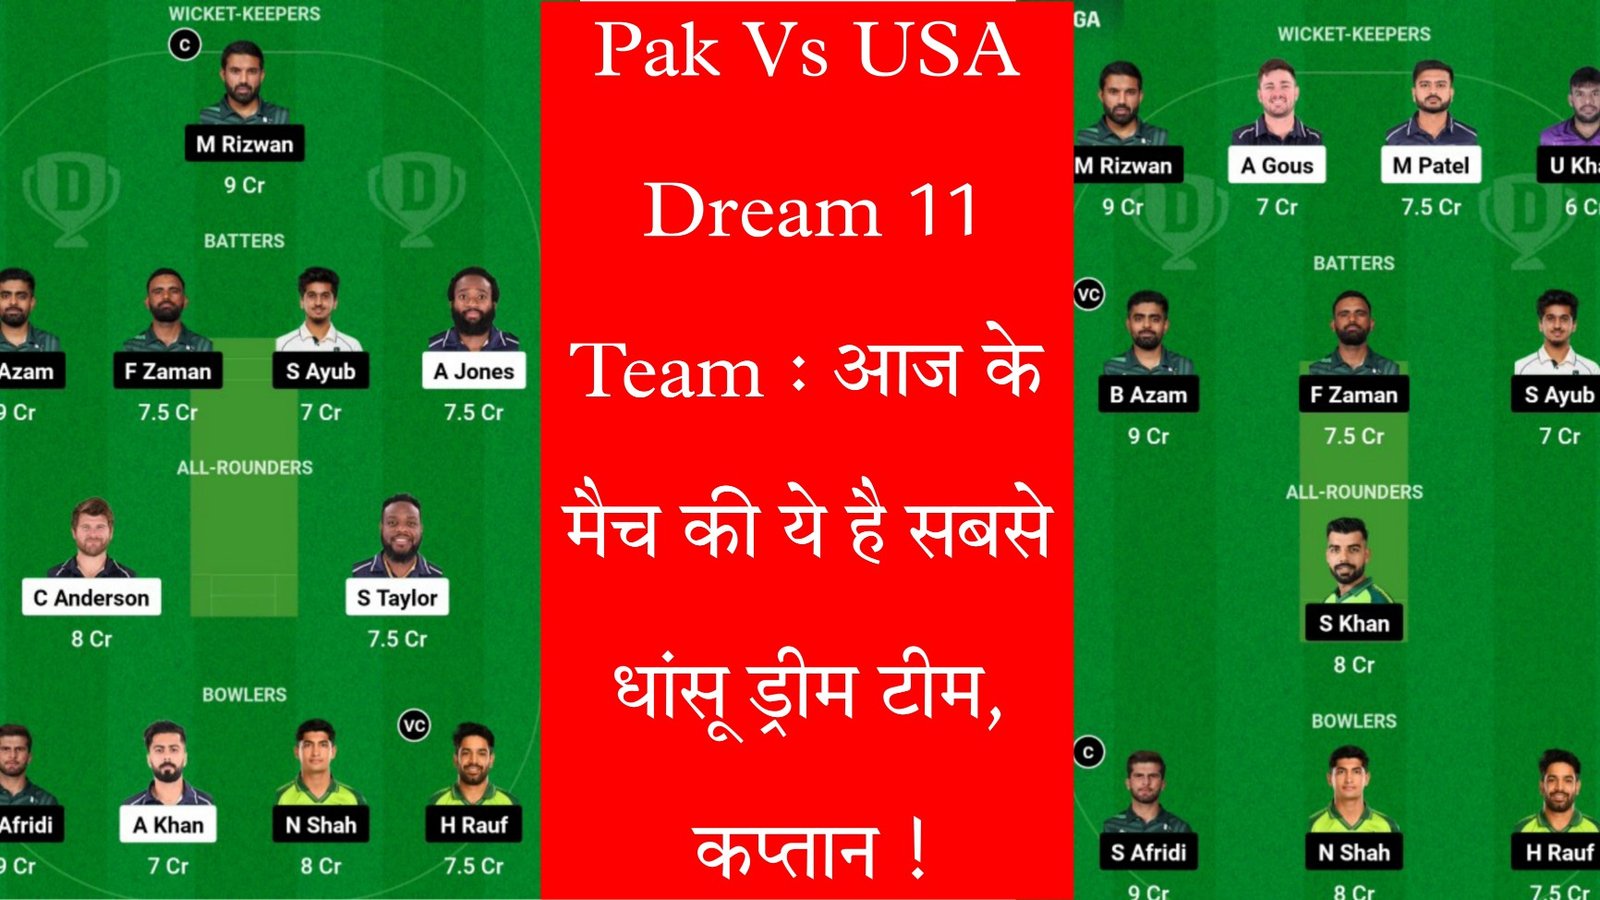 Pak Vs USA Dream 11 Team